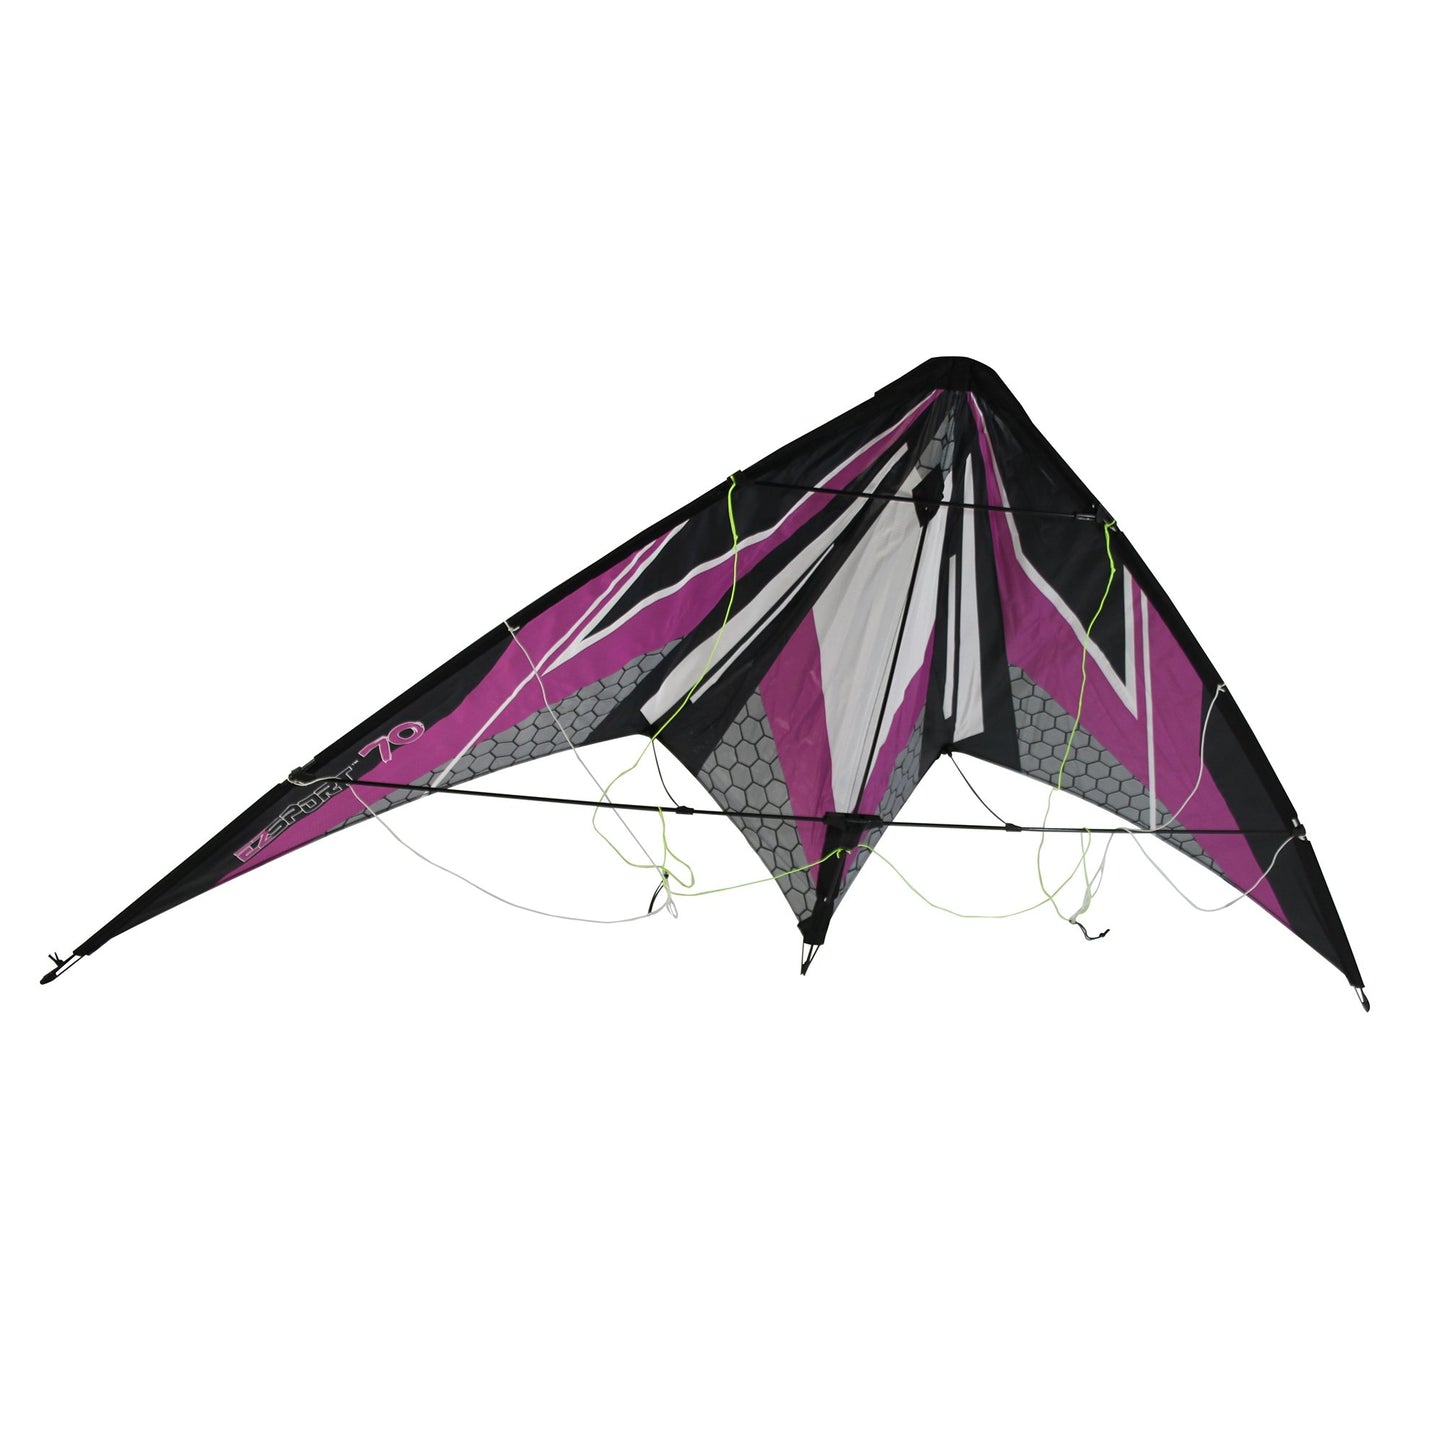 WindNSun EZ Sport 70 Dual Control Sport Kite Purple Hexagon Nylon Kite Product Image